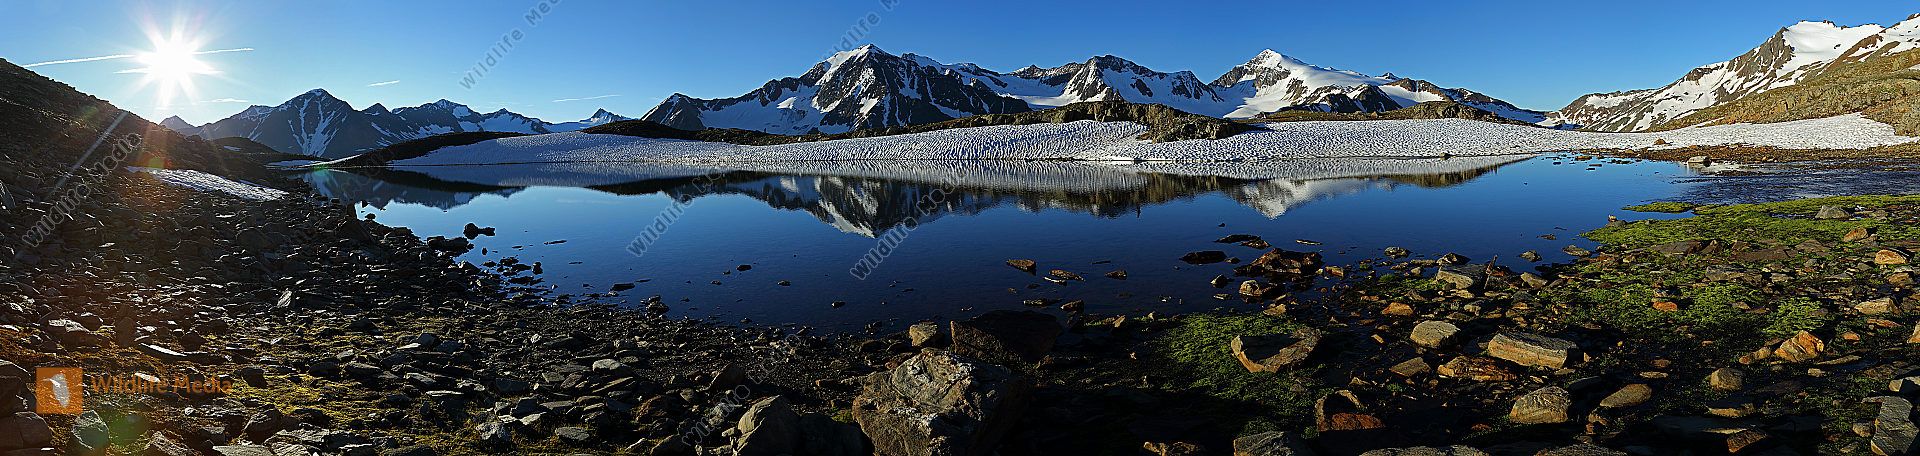 Ötztaler Alpen Panorama